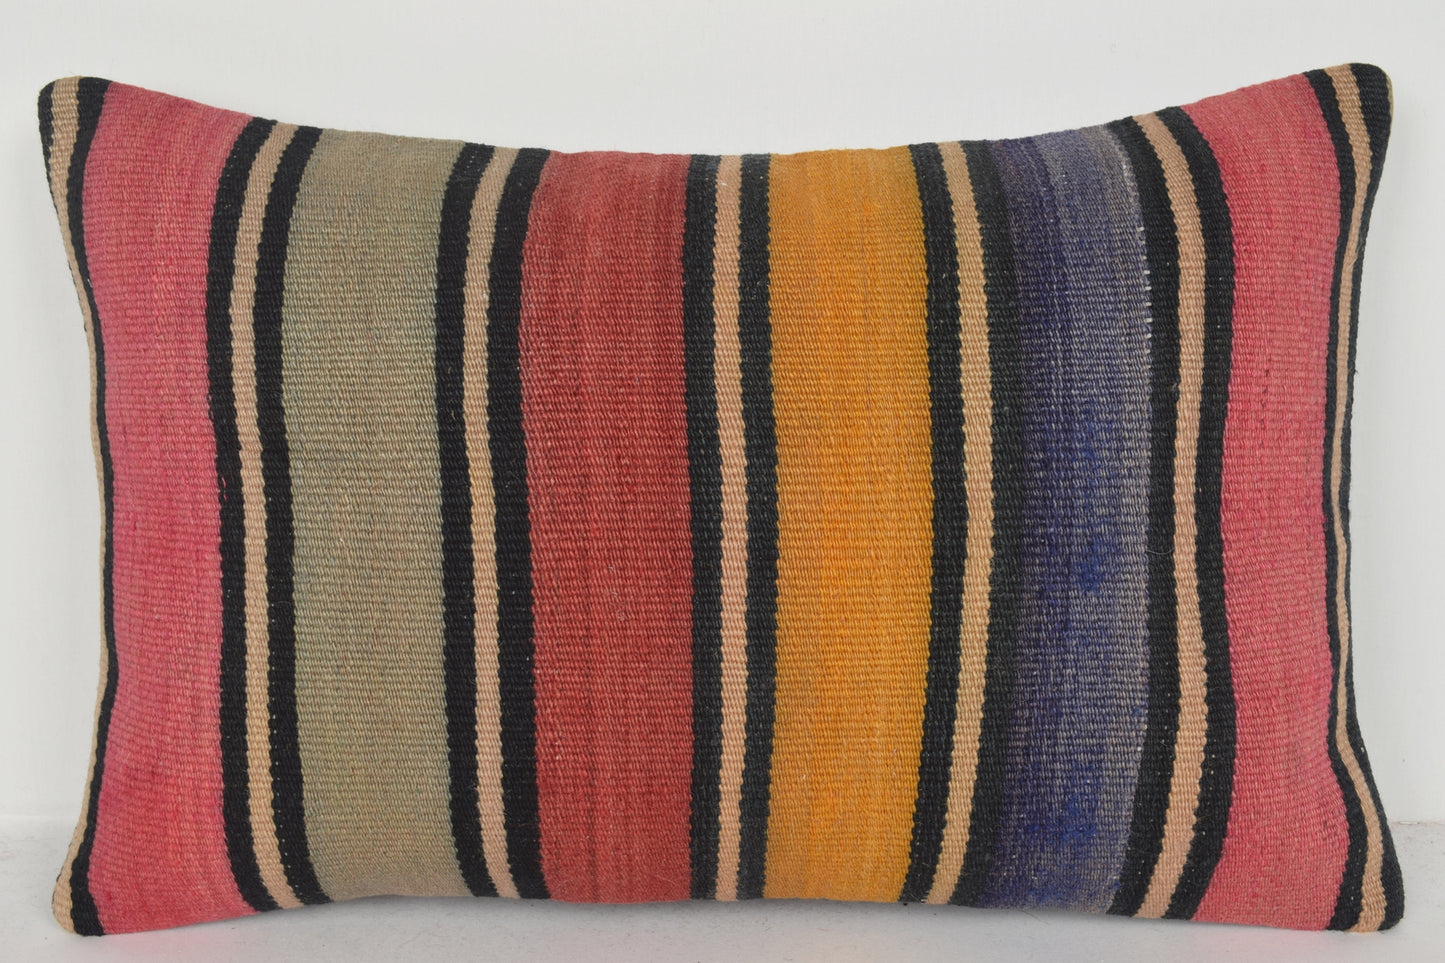 Kilim Pillow Covers for Sale E00507 Lumbar Fragment Handicraft